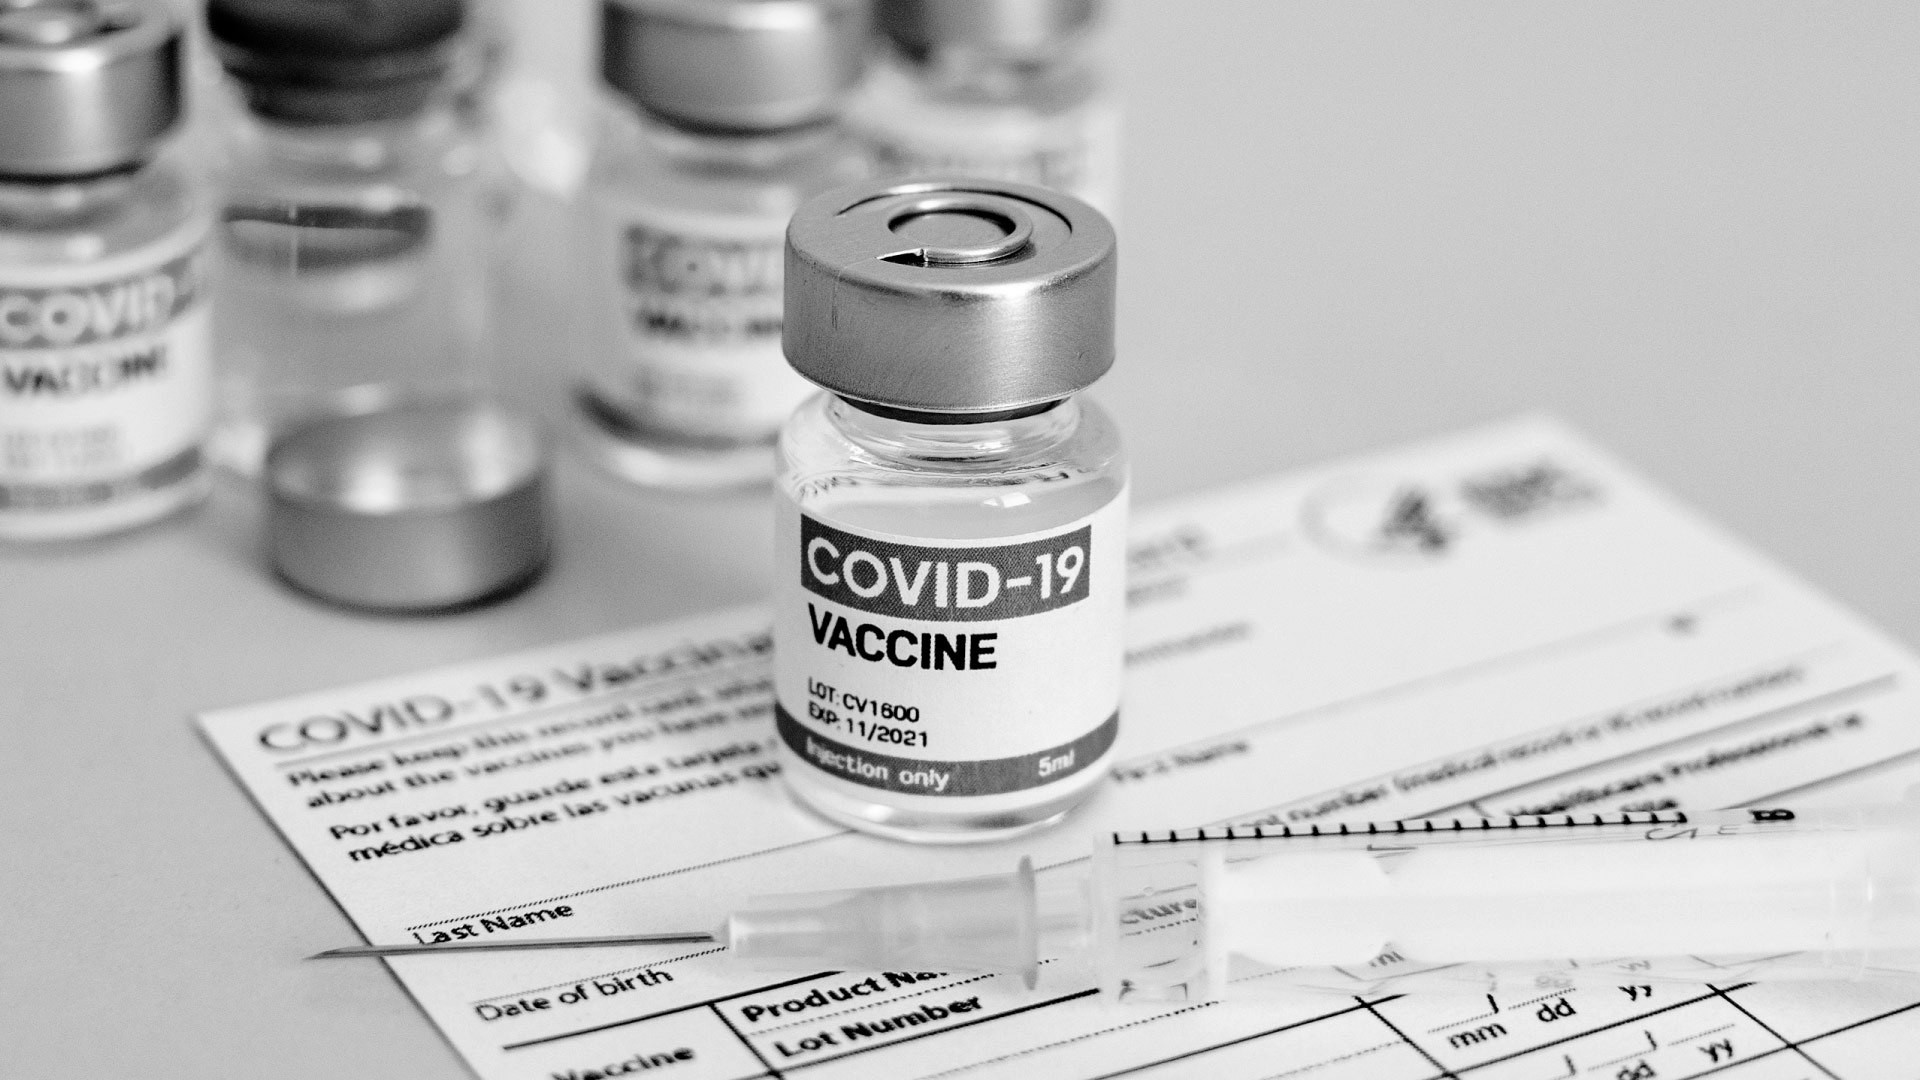 Image of COVID-19 vaccine